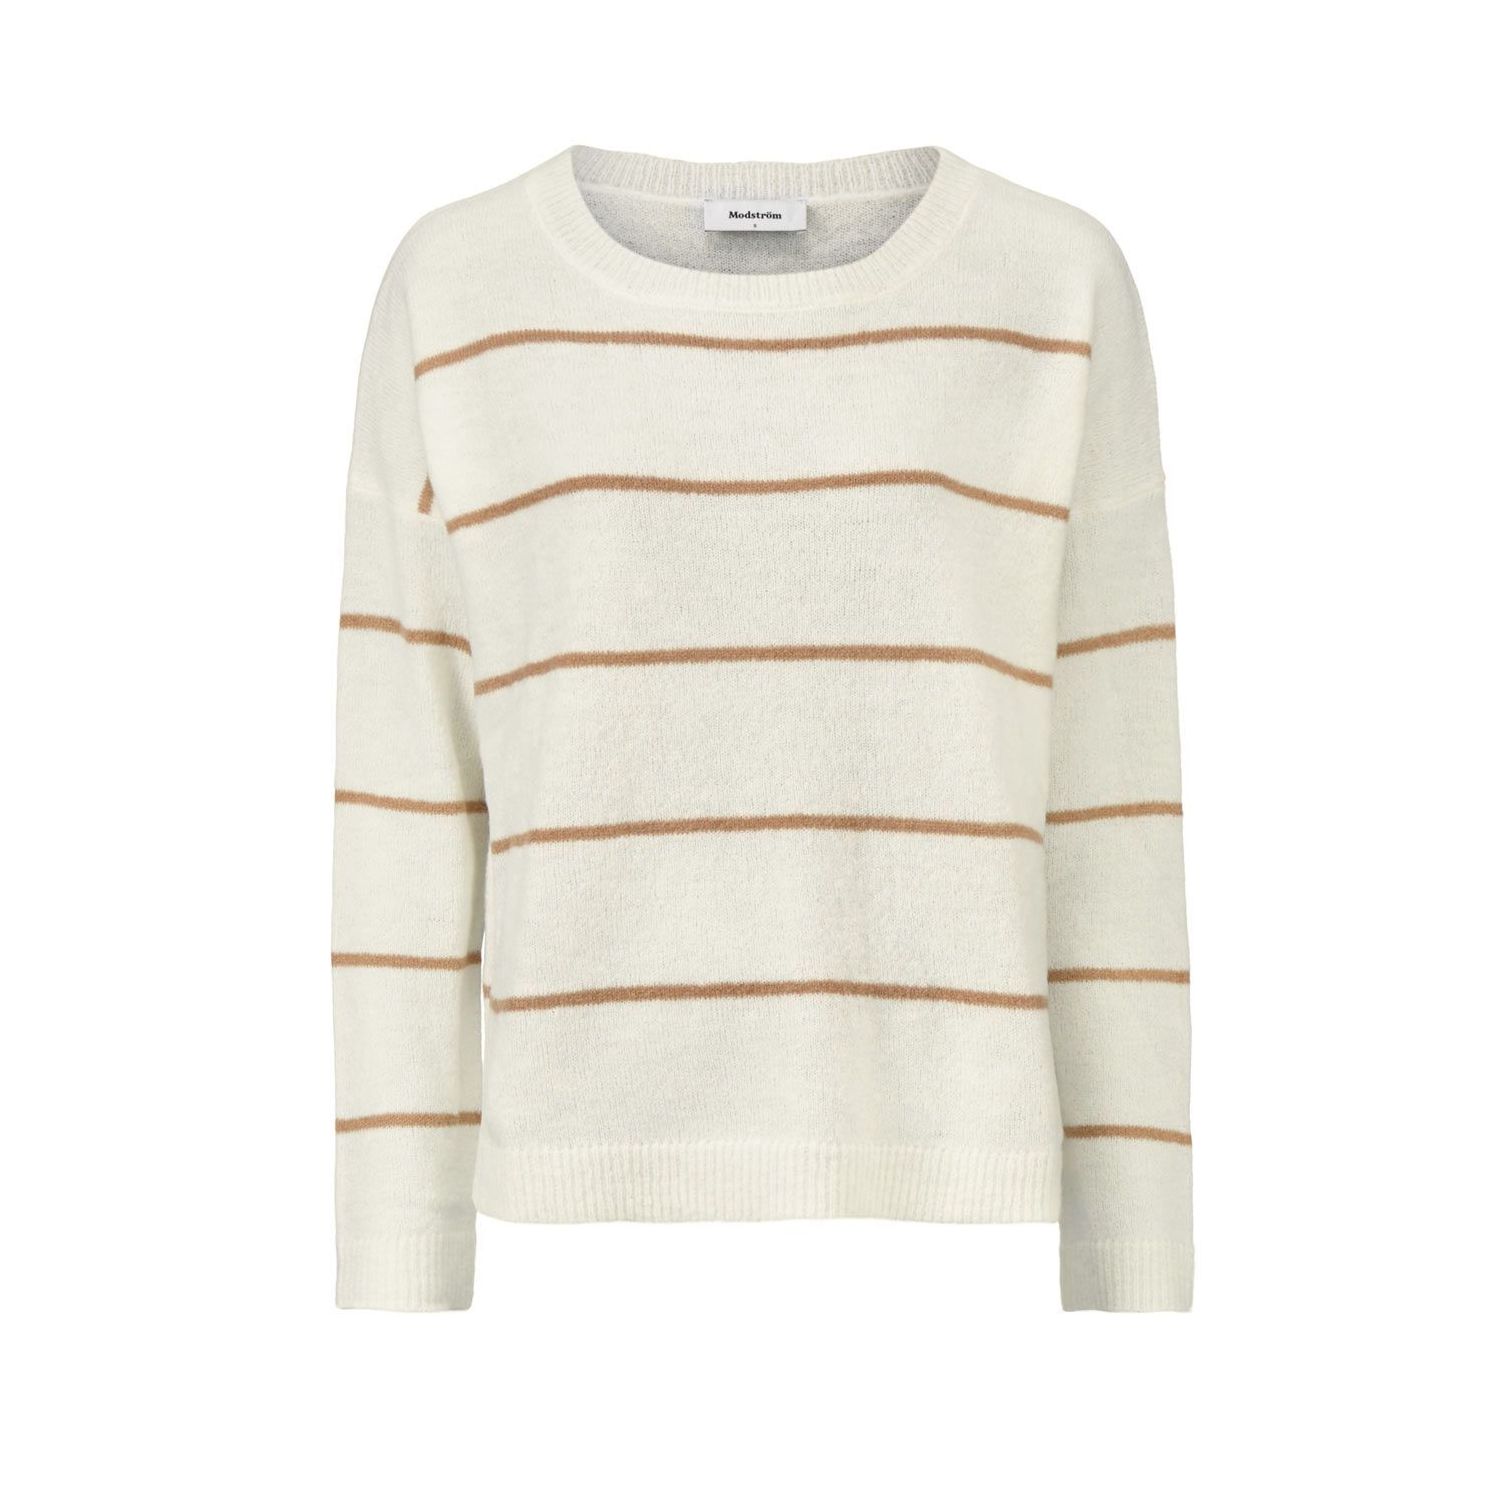 Modstrom agnes o-neck knit sweater white/camel